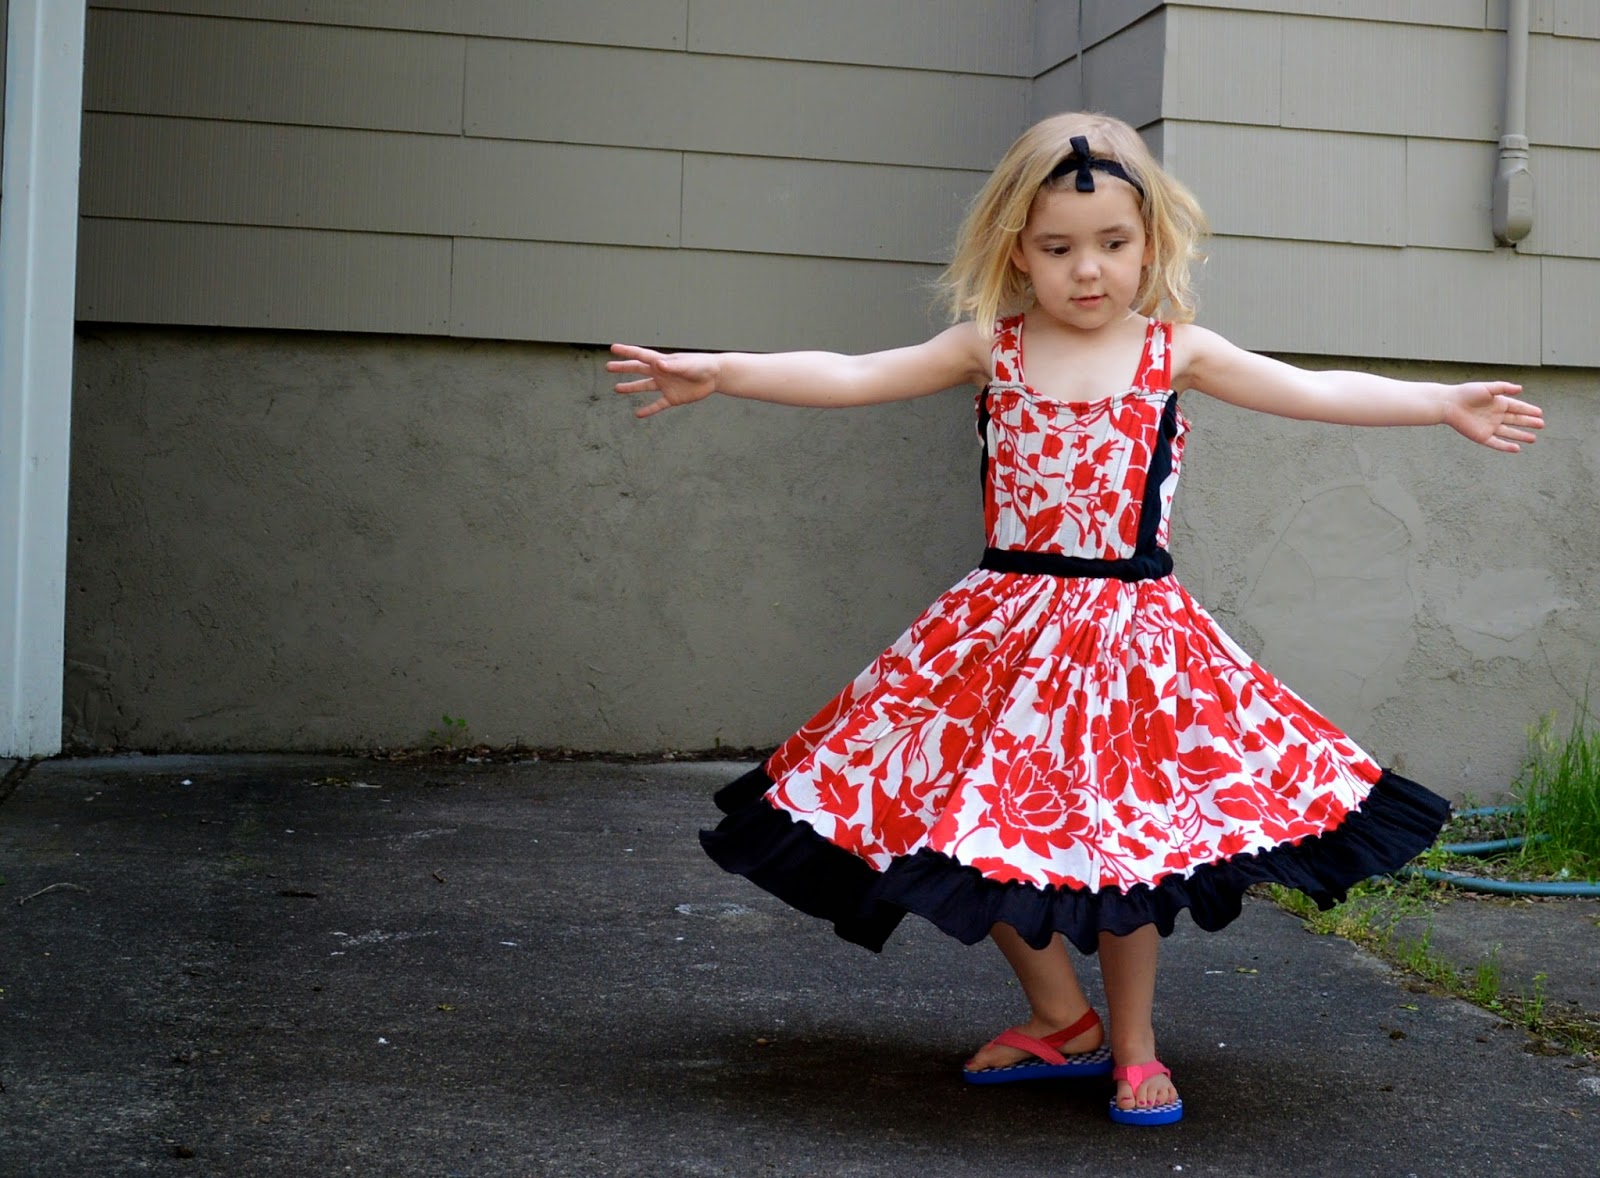 Beth Being Crafty: Upcycled Twirly Dress!